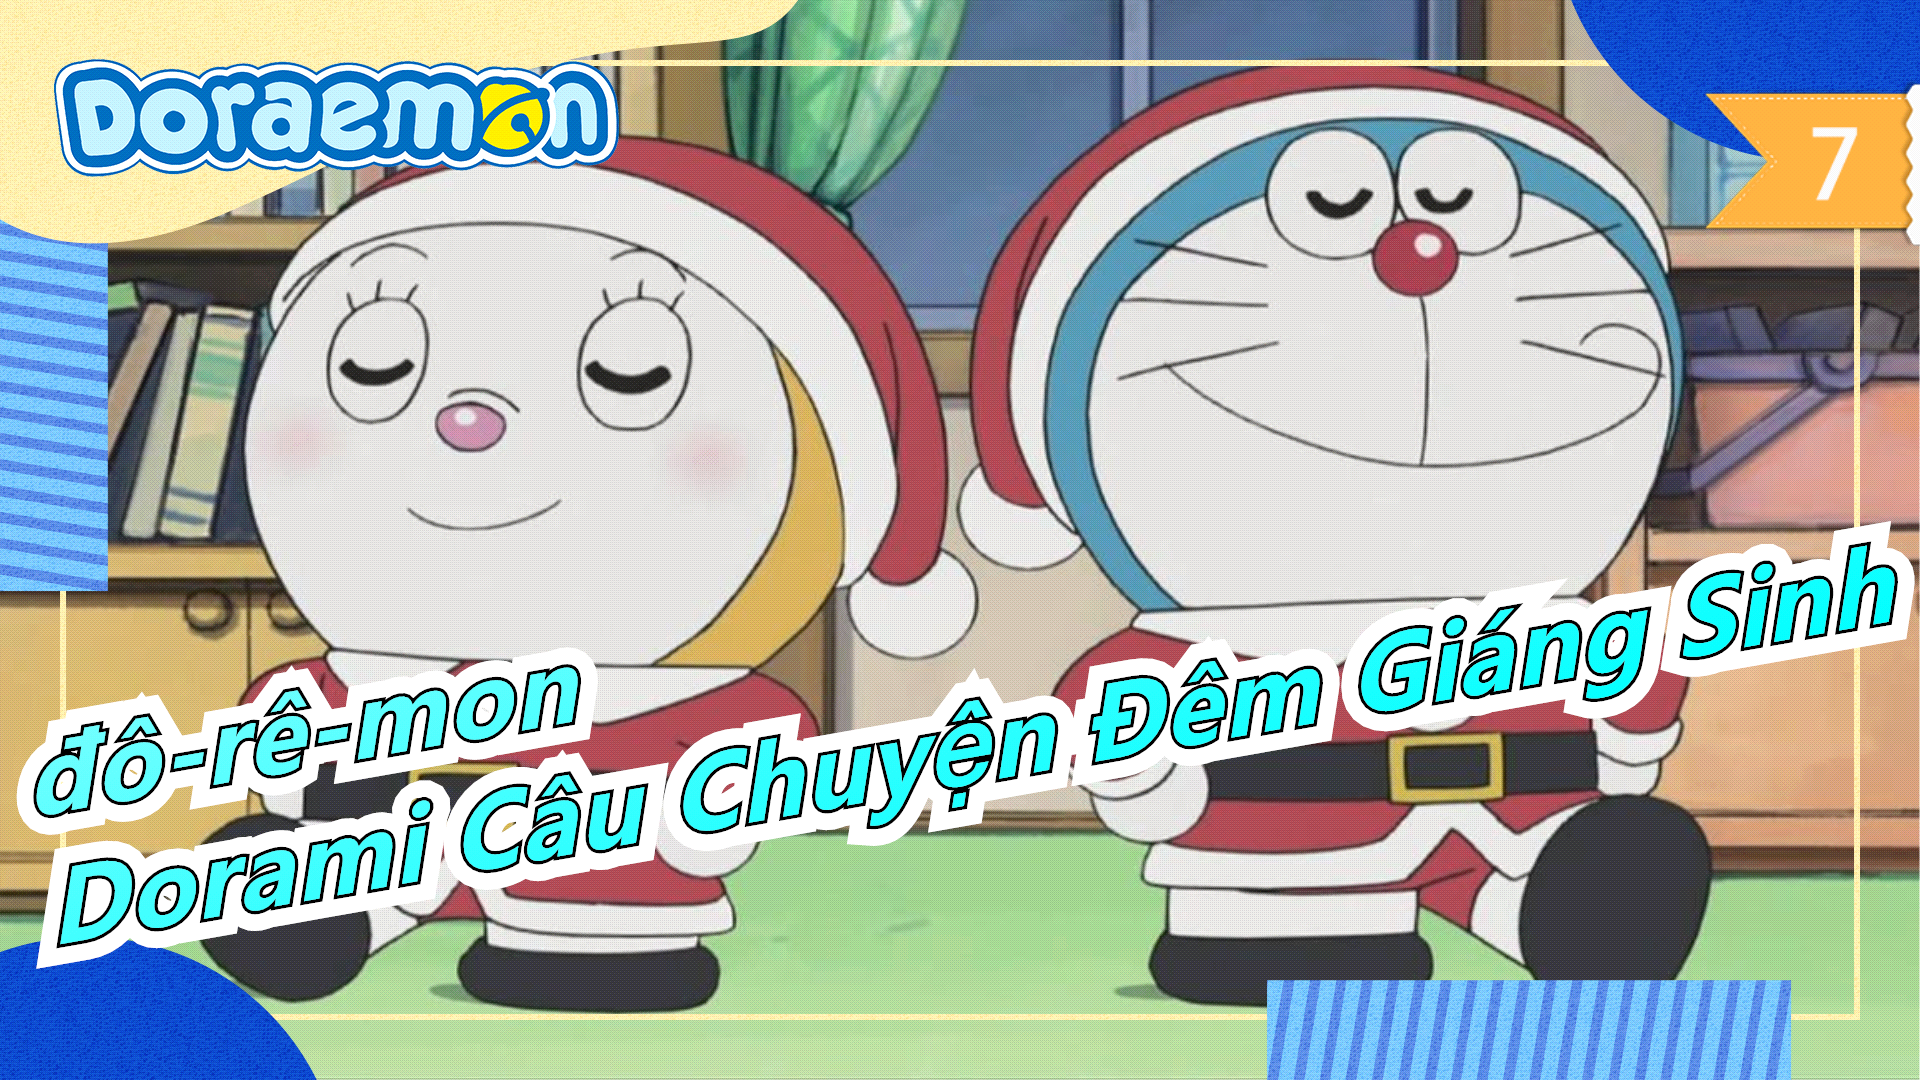 Sazac Doraemon Dorami-chan Costume Halloween Anime Free Size Free Shipping  NEW | eBay